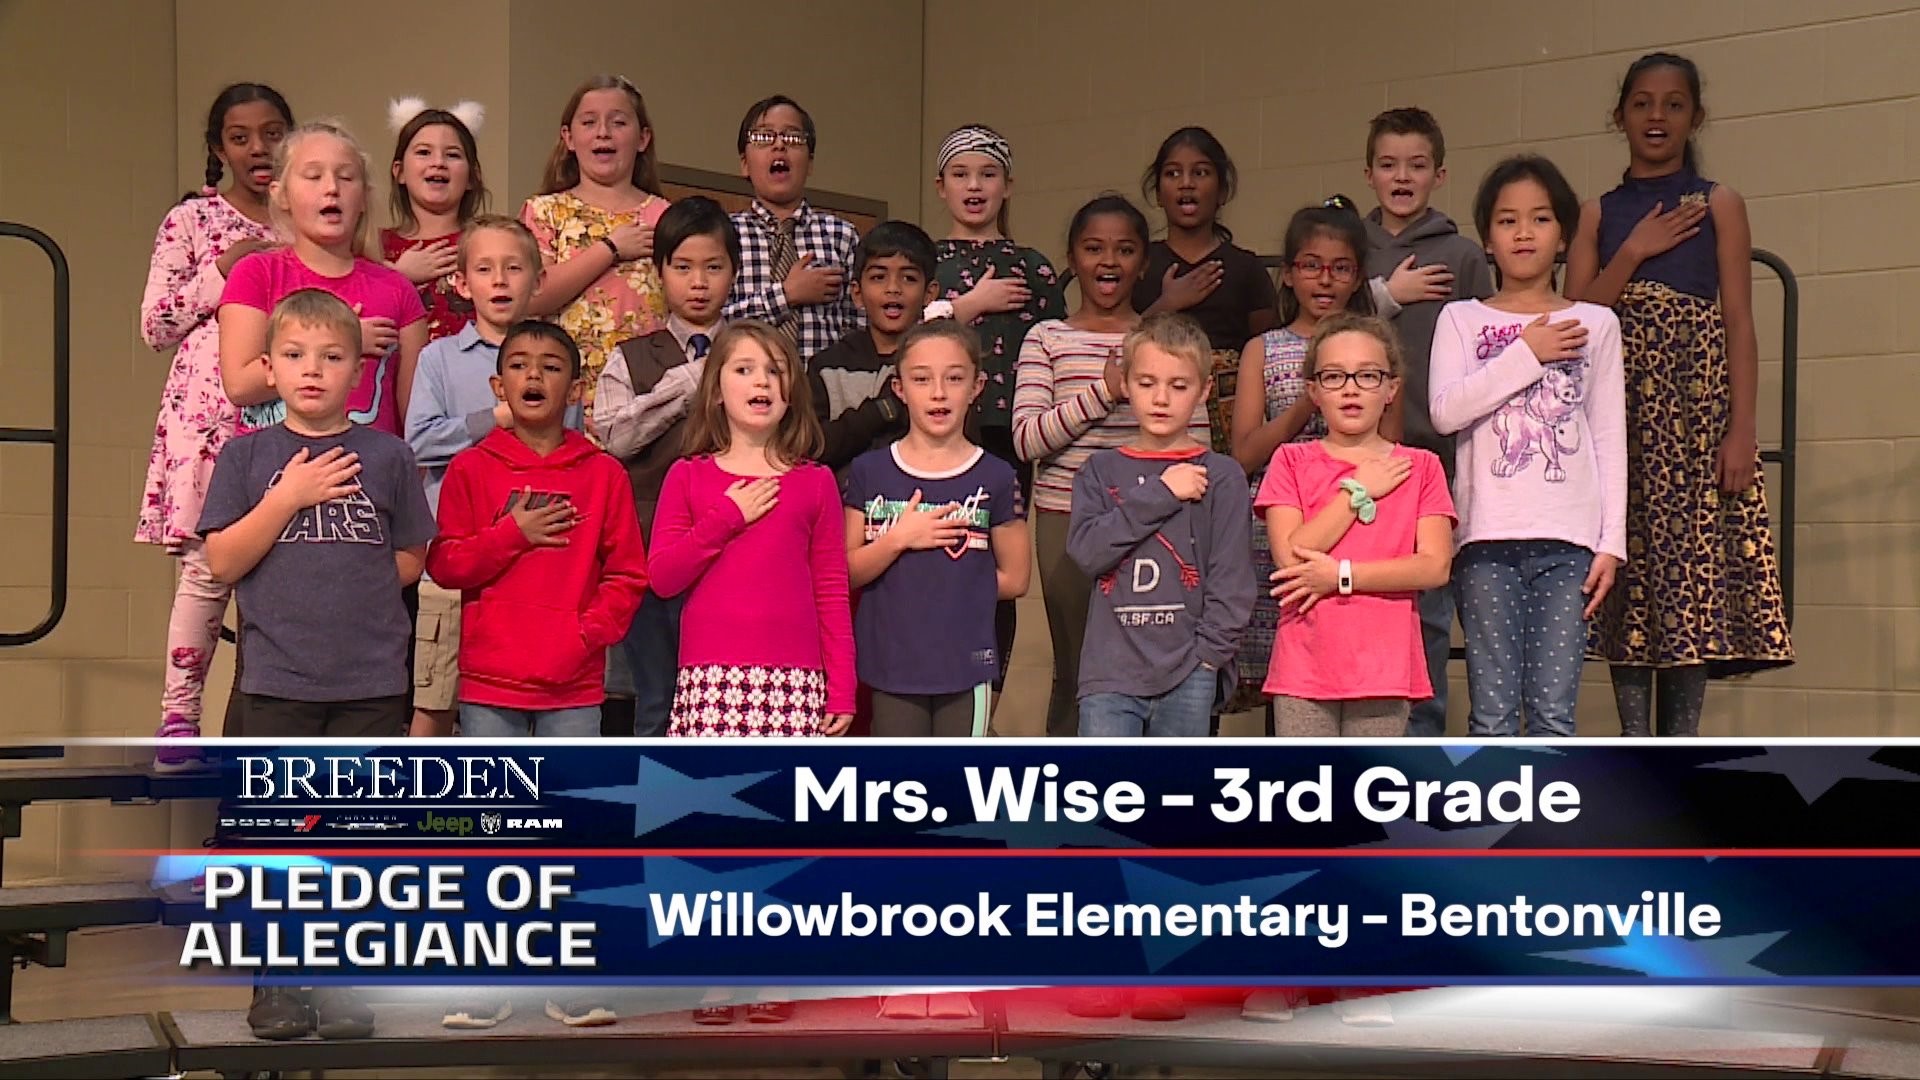 Mrs. Wise 3rd Grade Willowbrook Elementary, Bentonville